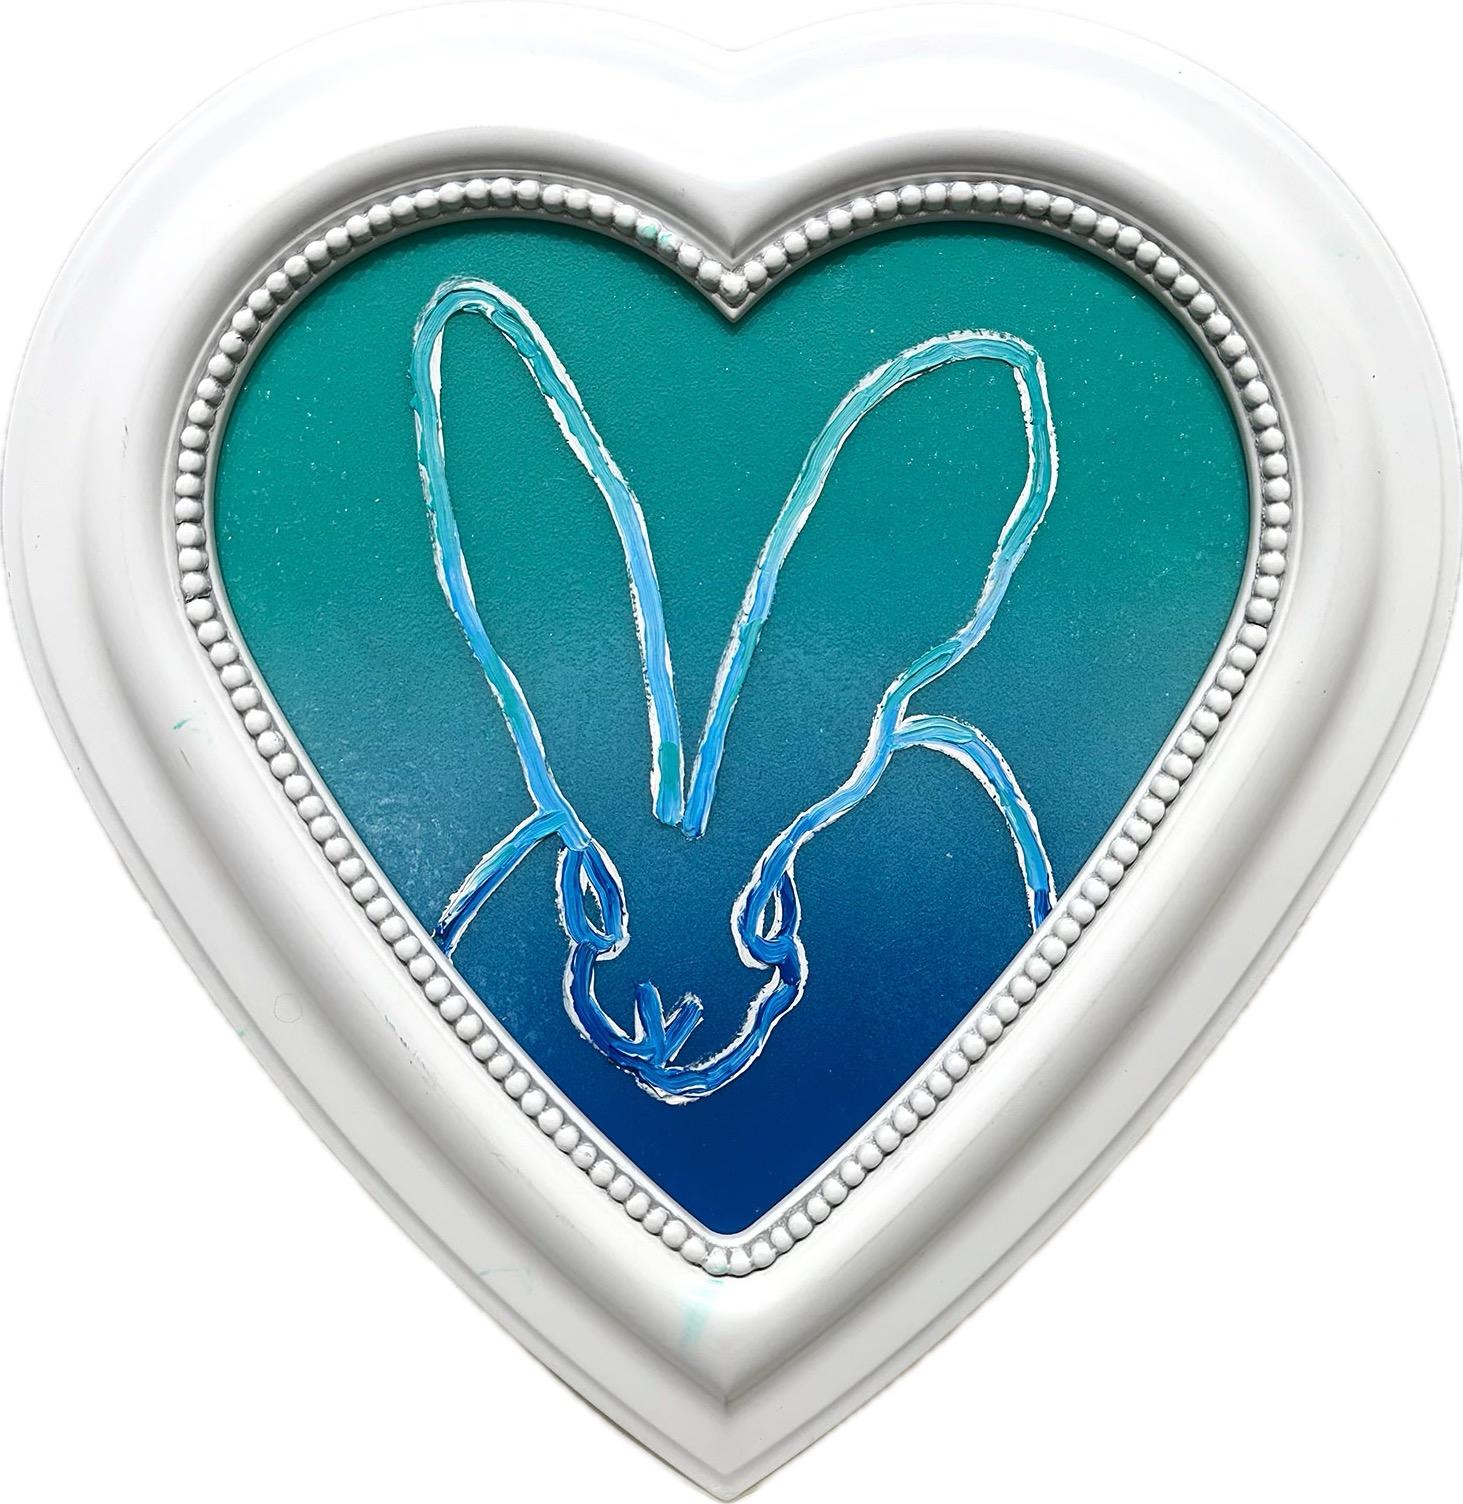 "Heart Felt" Heart Shaped Diamond Dust Turquoise Bunny Oil Painting Framed